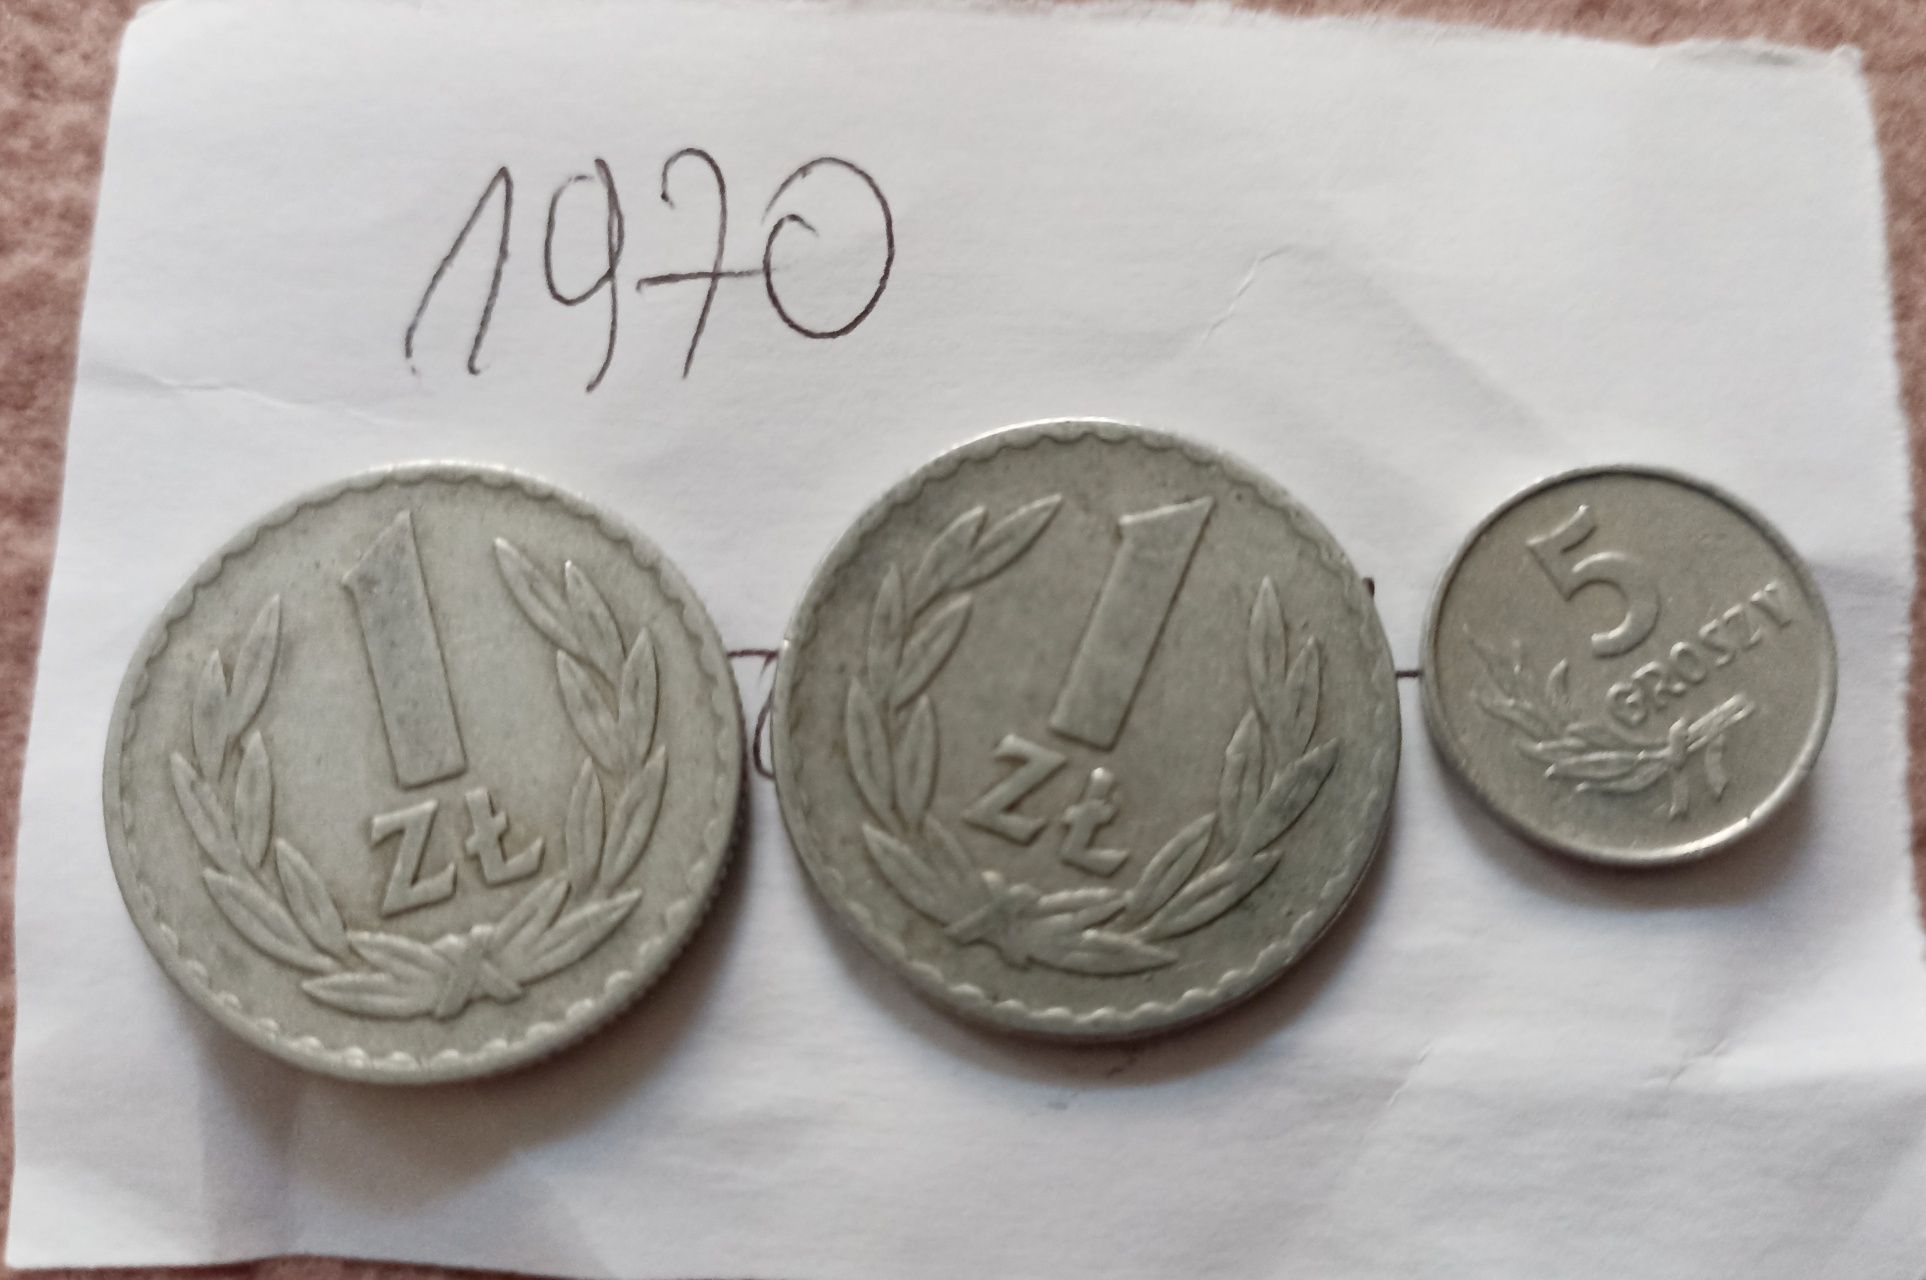 3 stare monety z 1970 roku